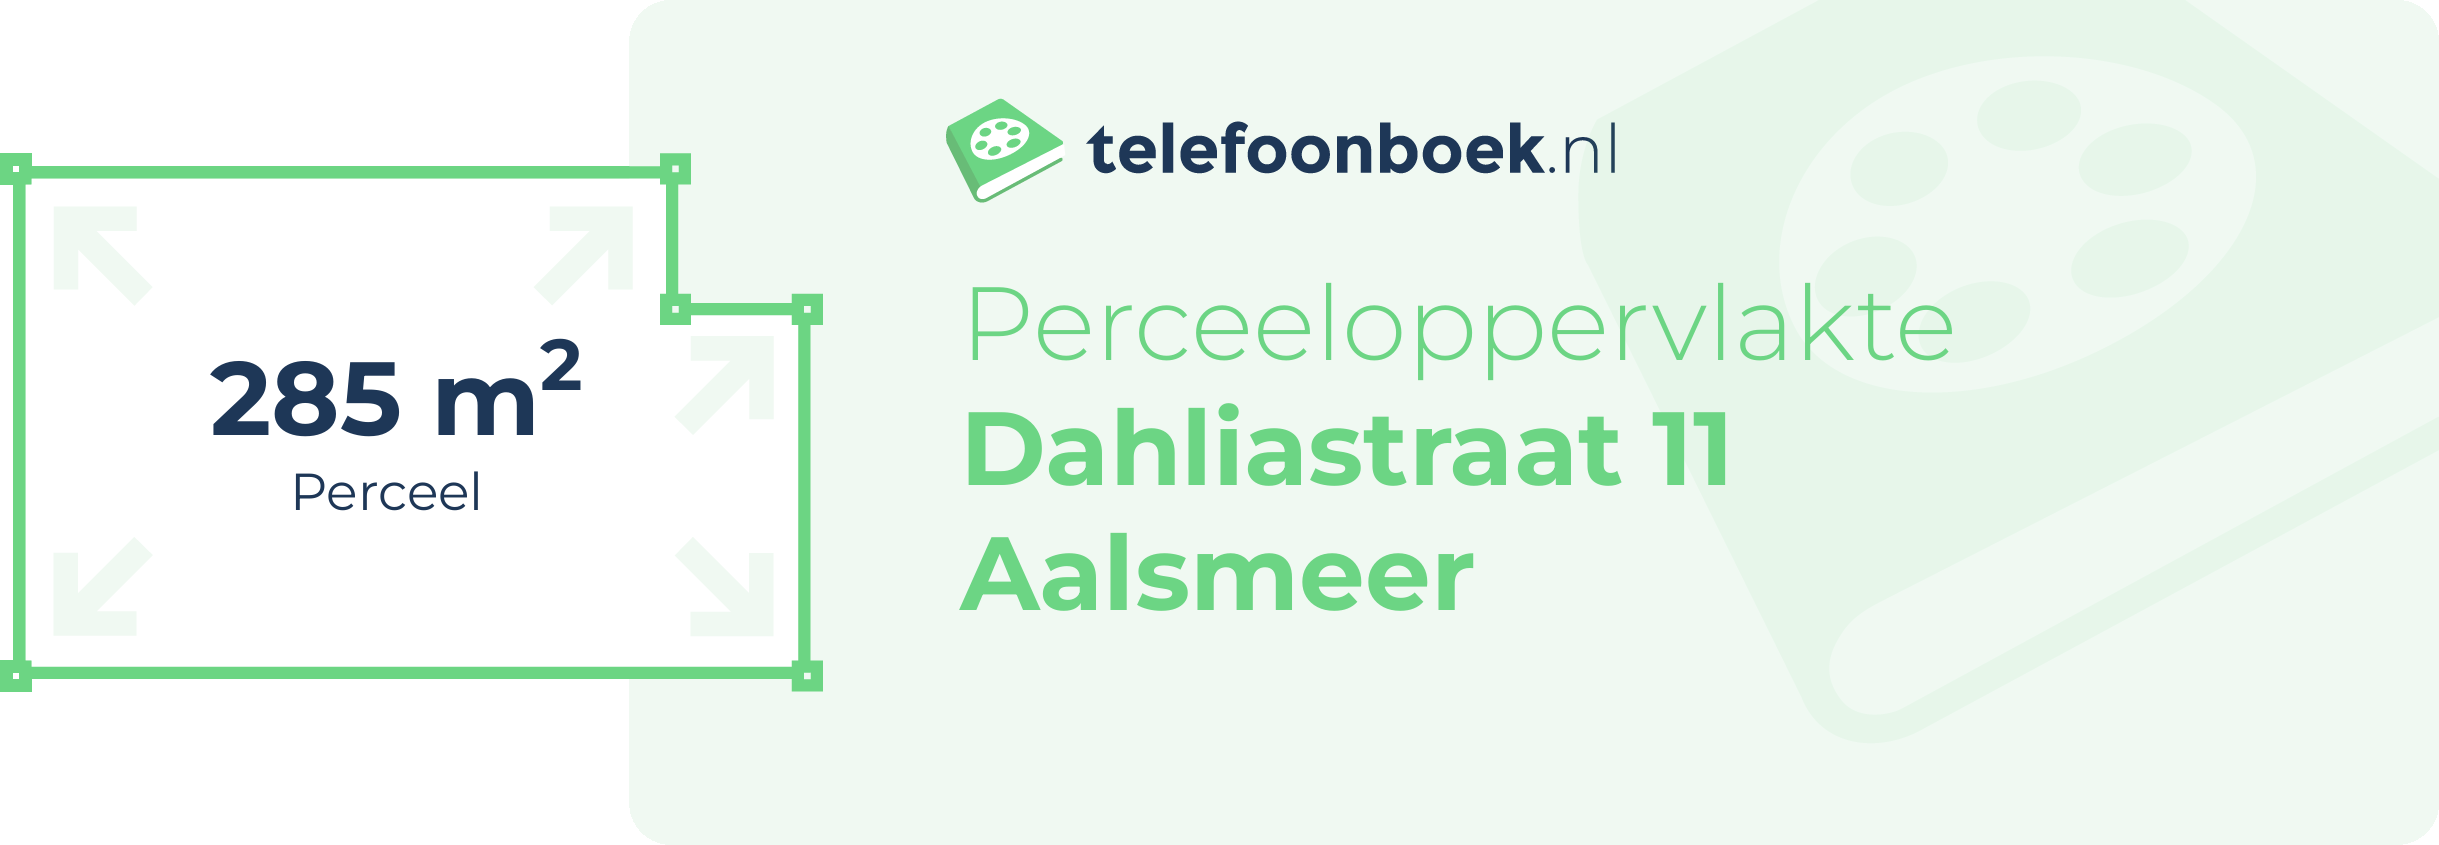 Perceeloppervlakte Dahliastraat 11 Aalsmeer